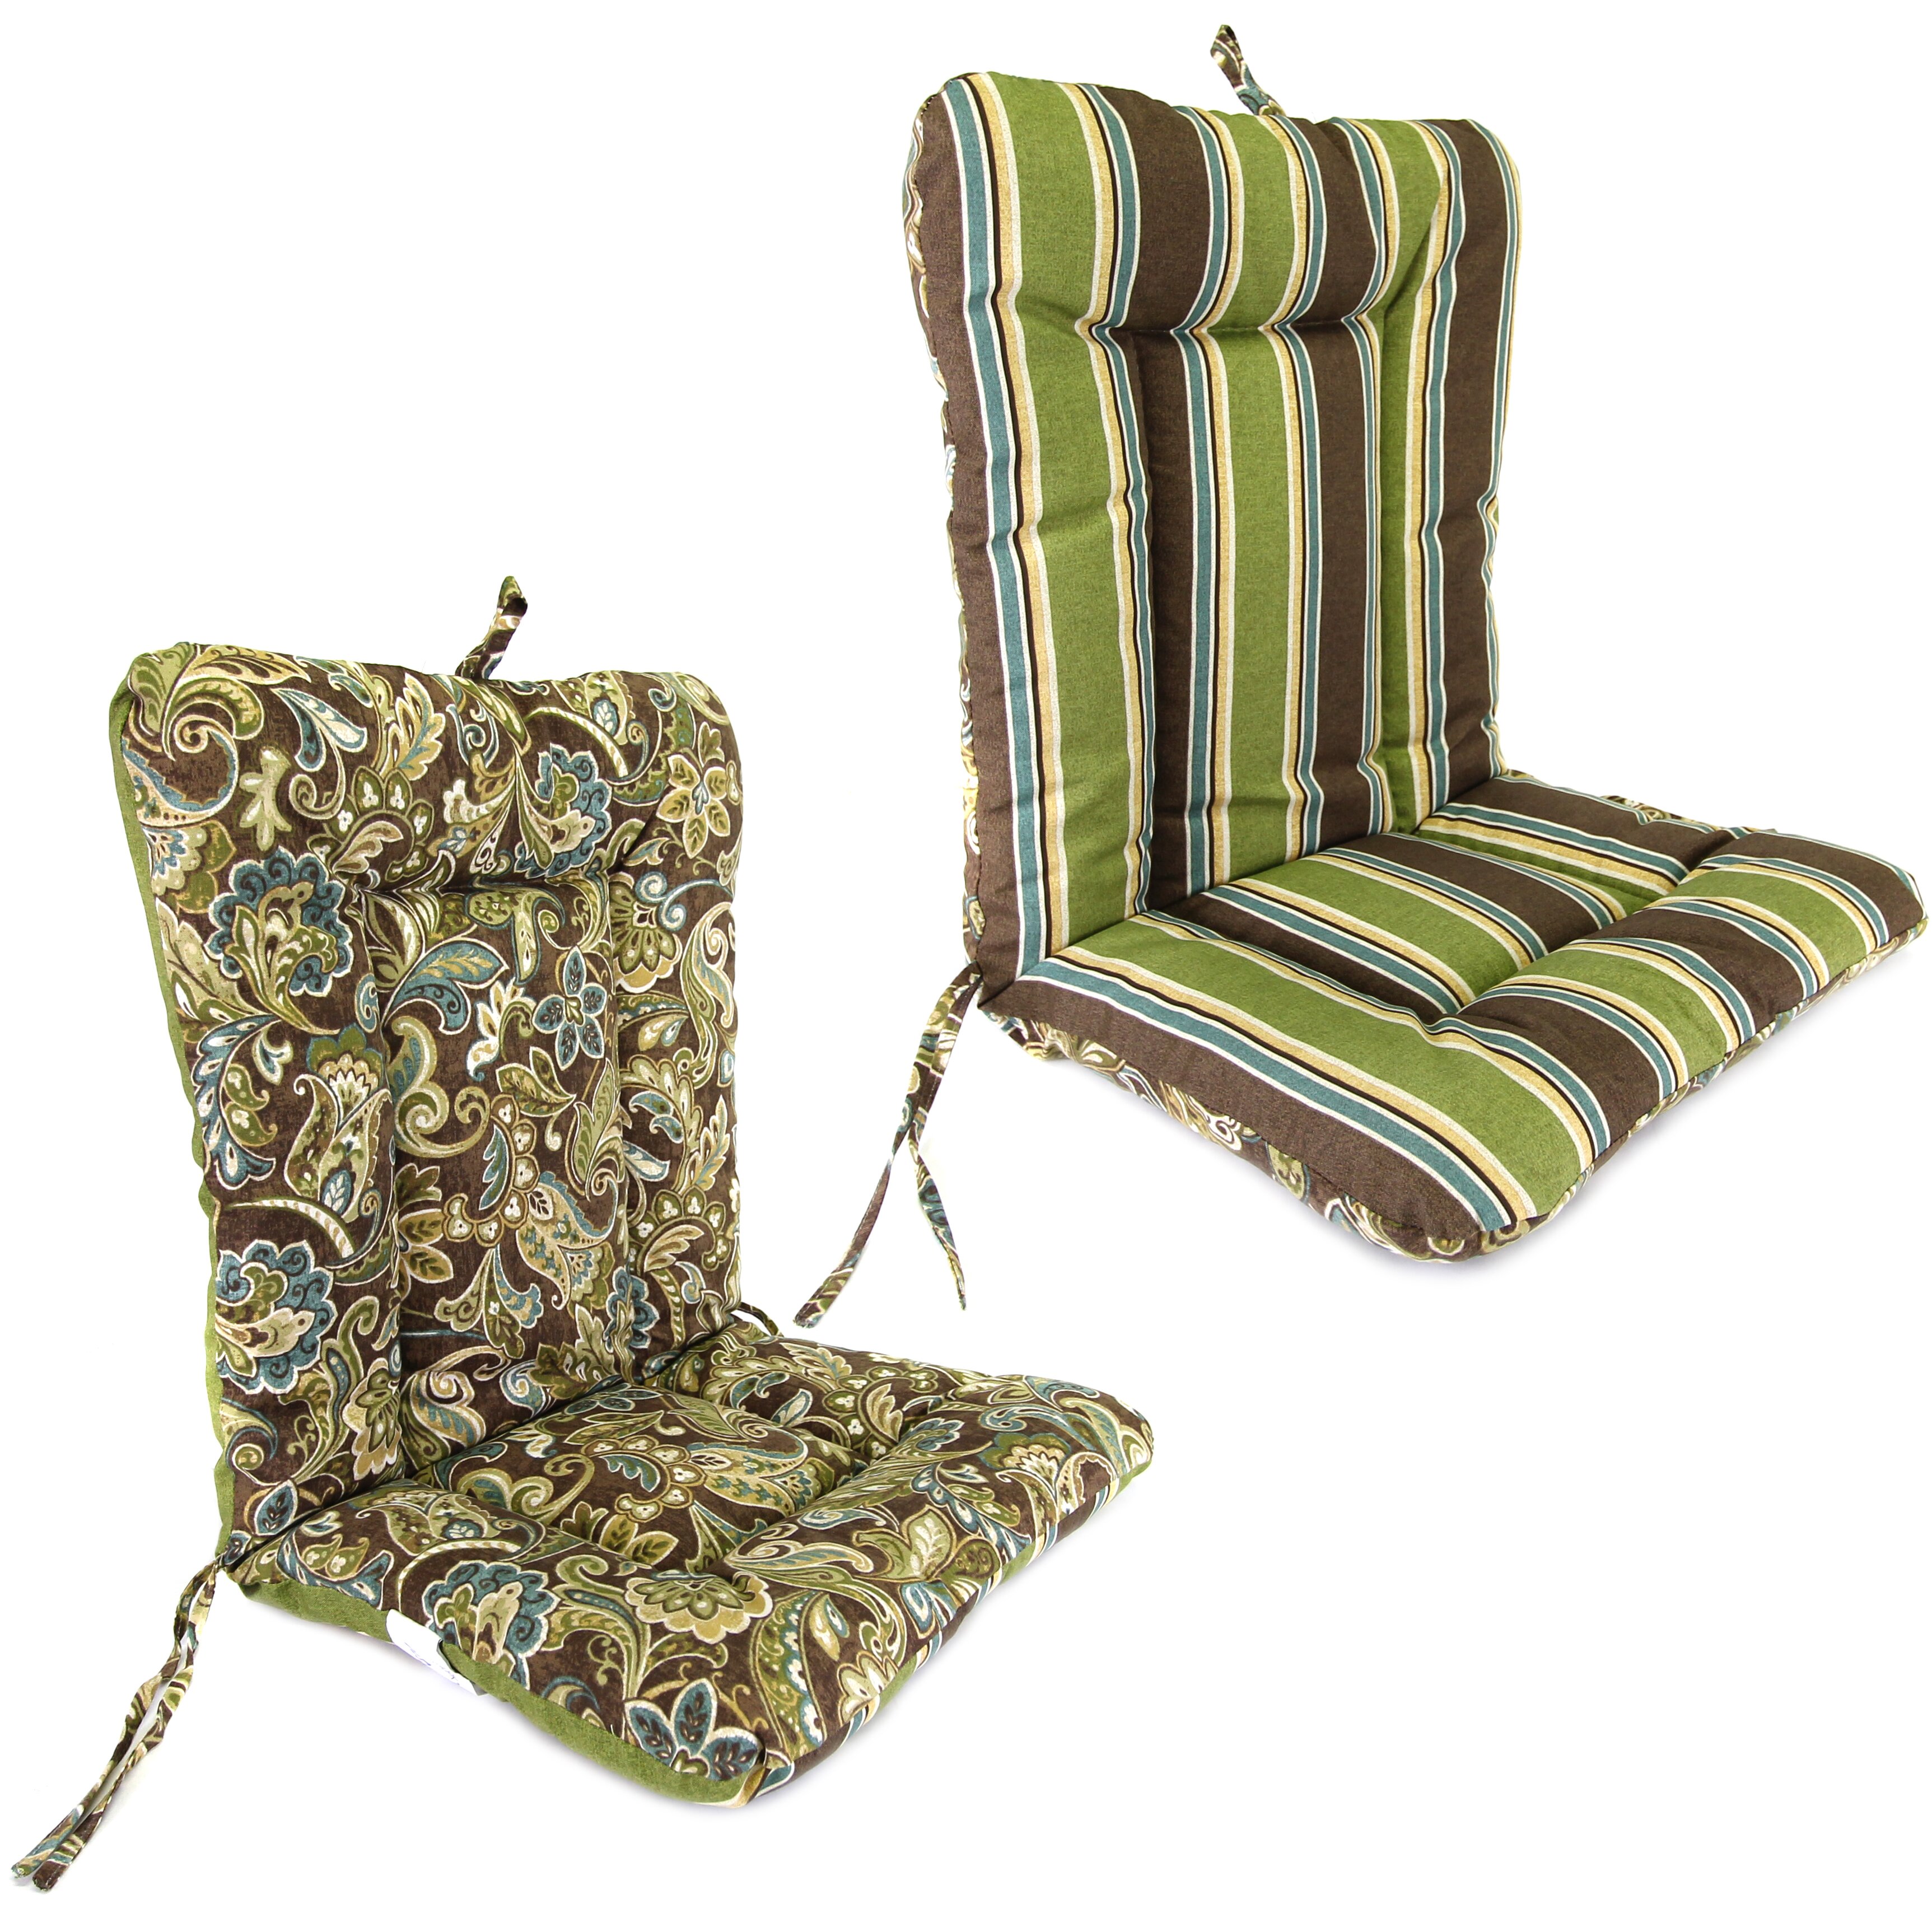 Jordan Manufacturing Wrought Iron Outdoor Dining Chair Cushion